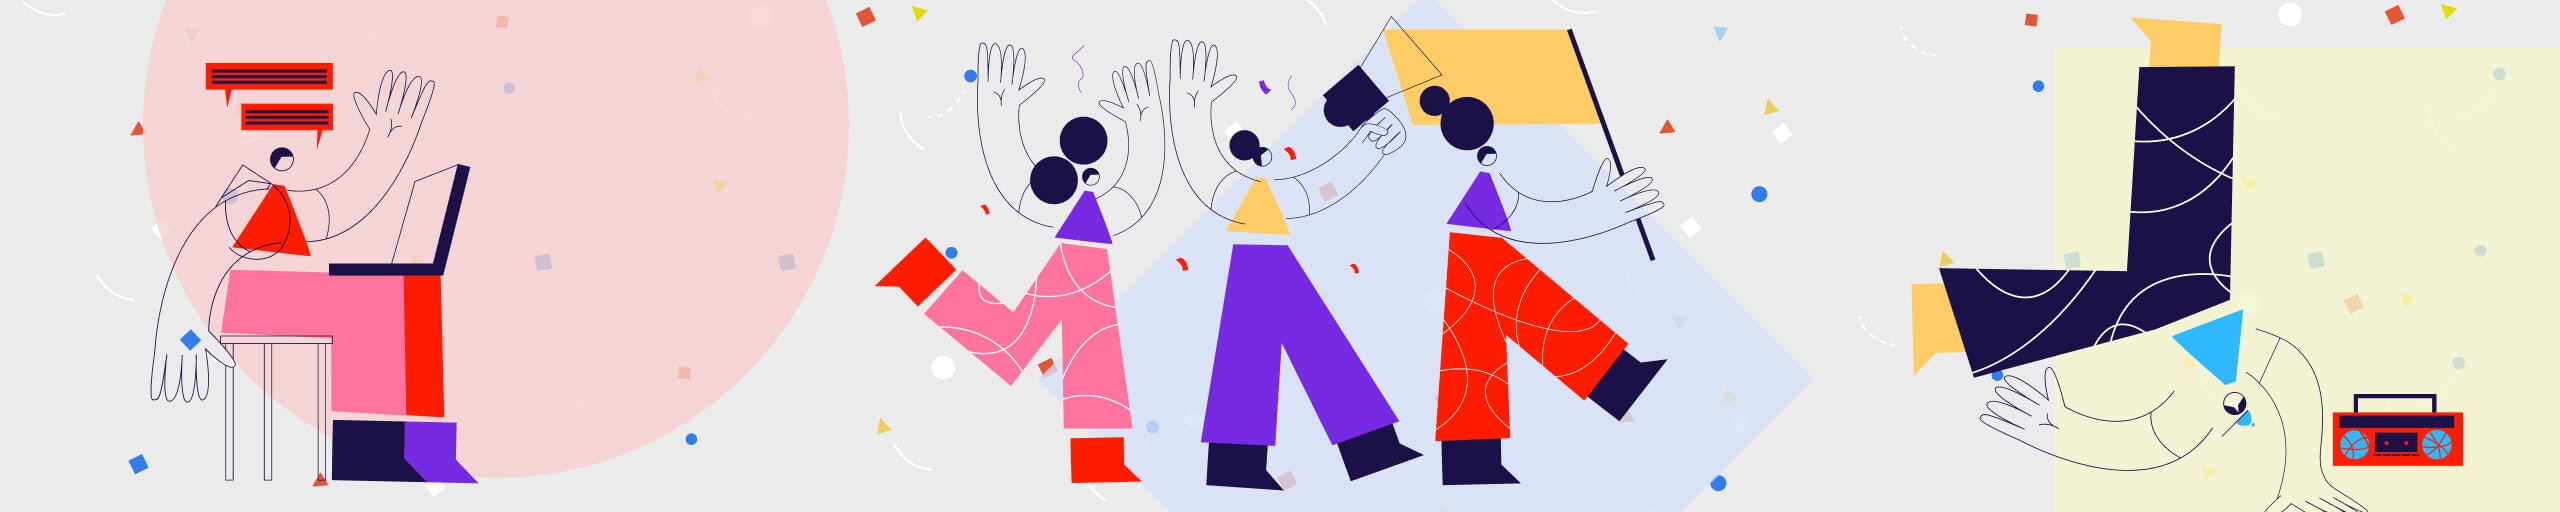 An illustration of various generic people dancing, sitting and break-dancing.